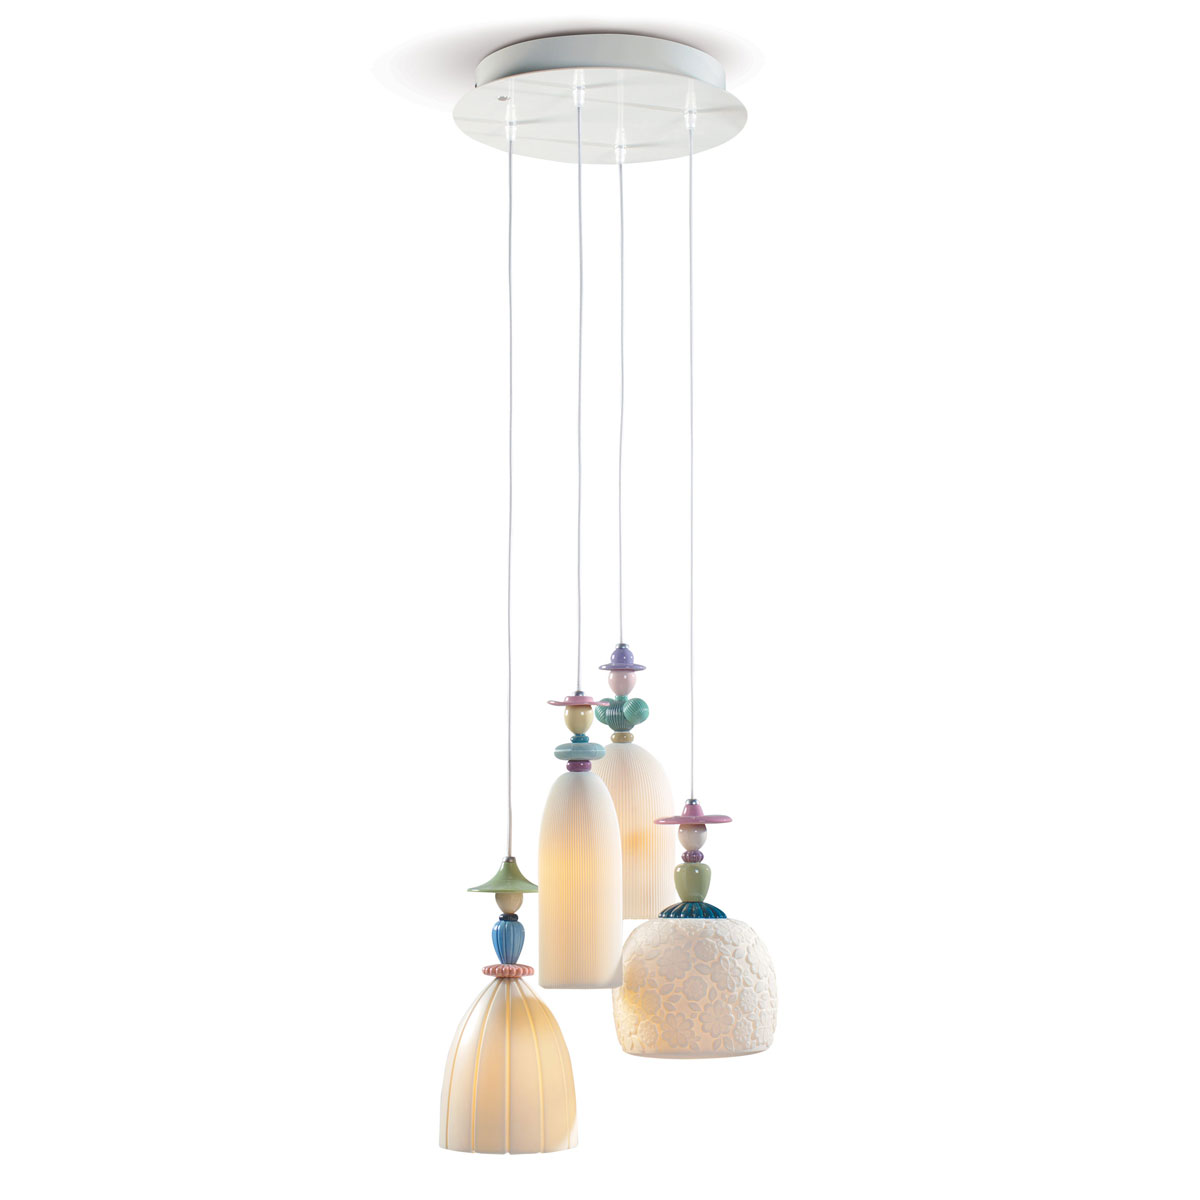 Lladro Classic Lighting, Mademoiselle 4 Lights Walking On The Beach Ceiling Lamp